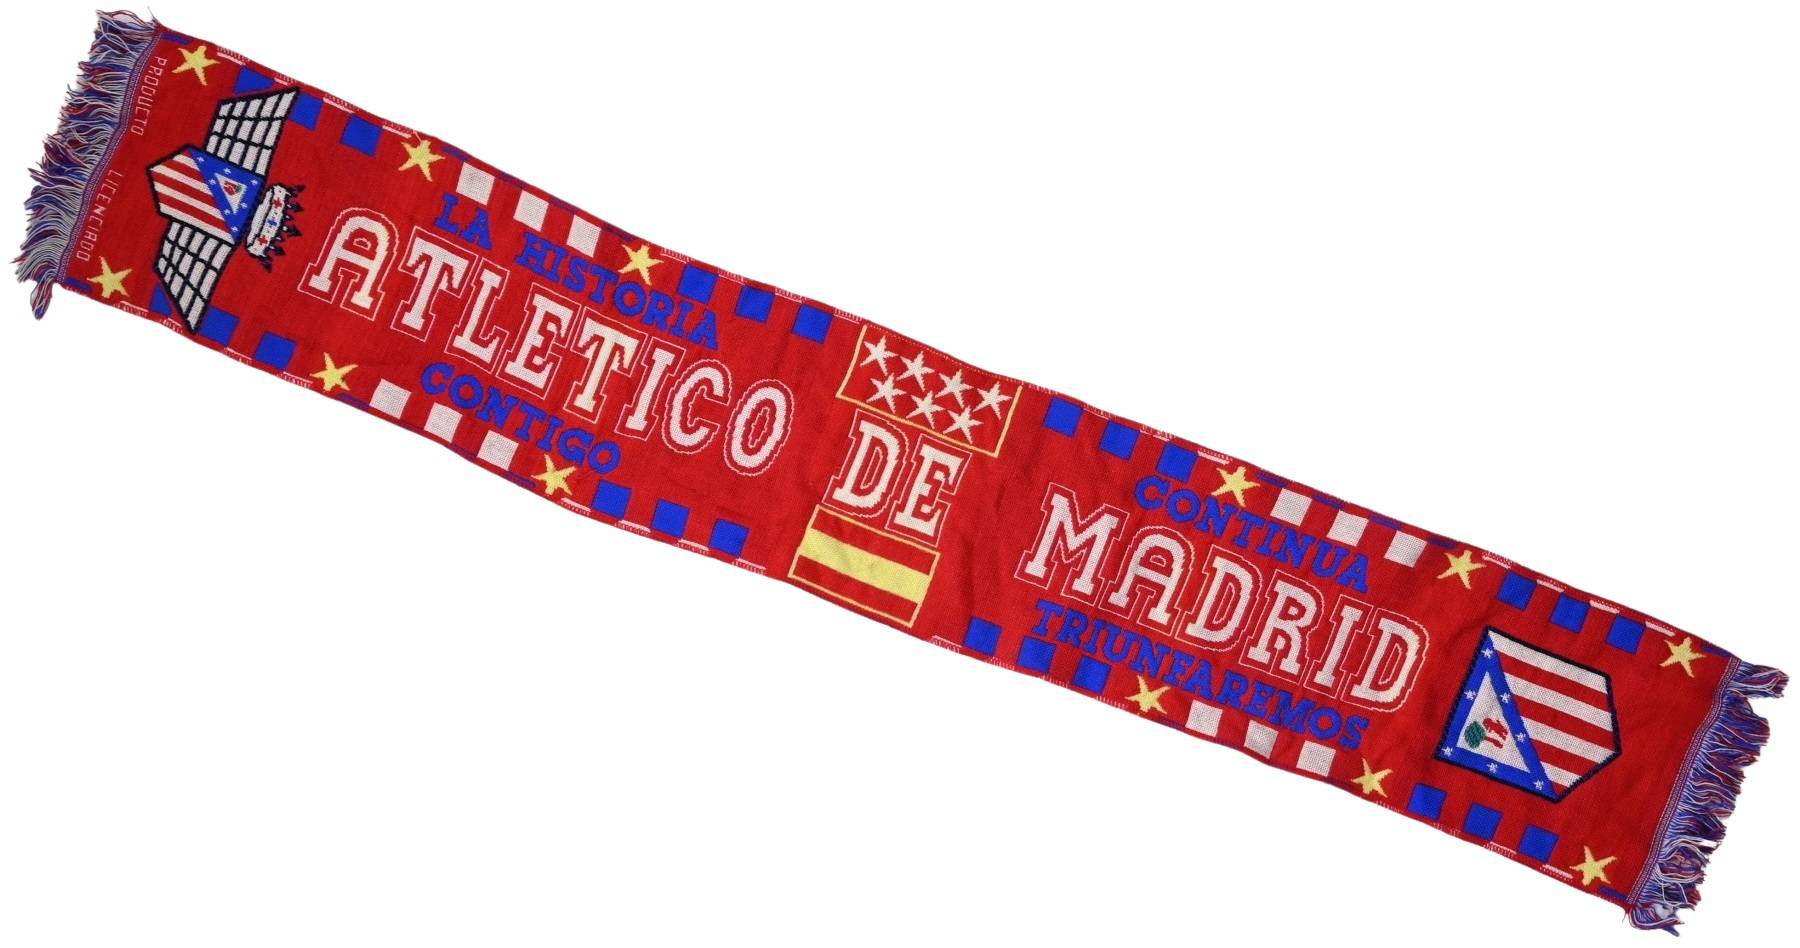 PORTO ATLETICO DE MADRID FOOTBALL SCARF CHAMPIONS LEAGUE 1/8 SOCCER BUFANDA